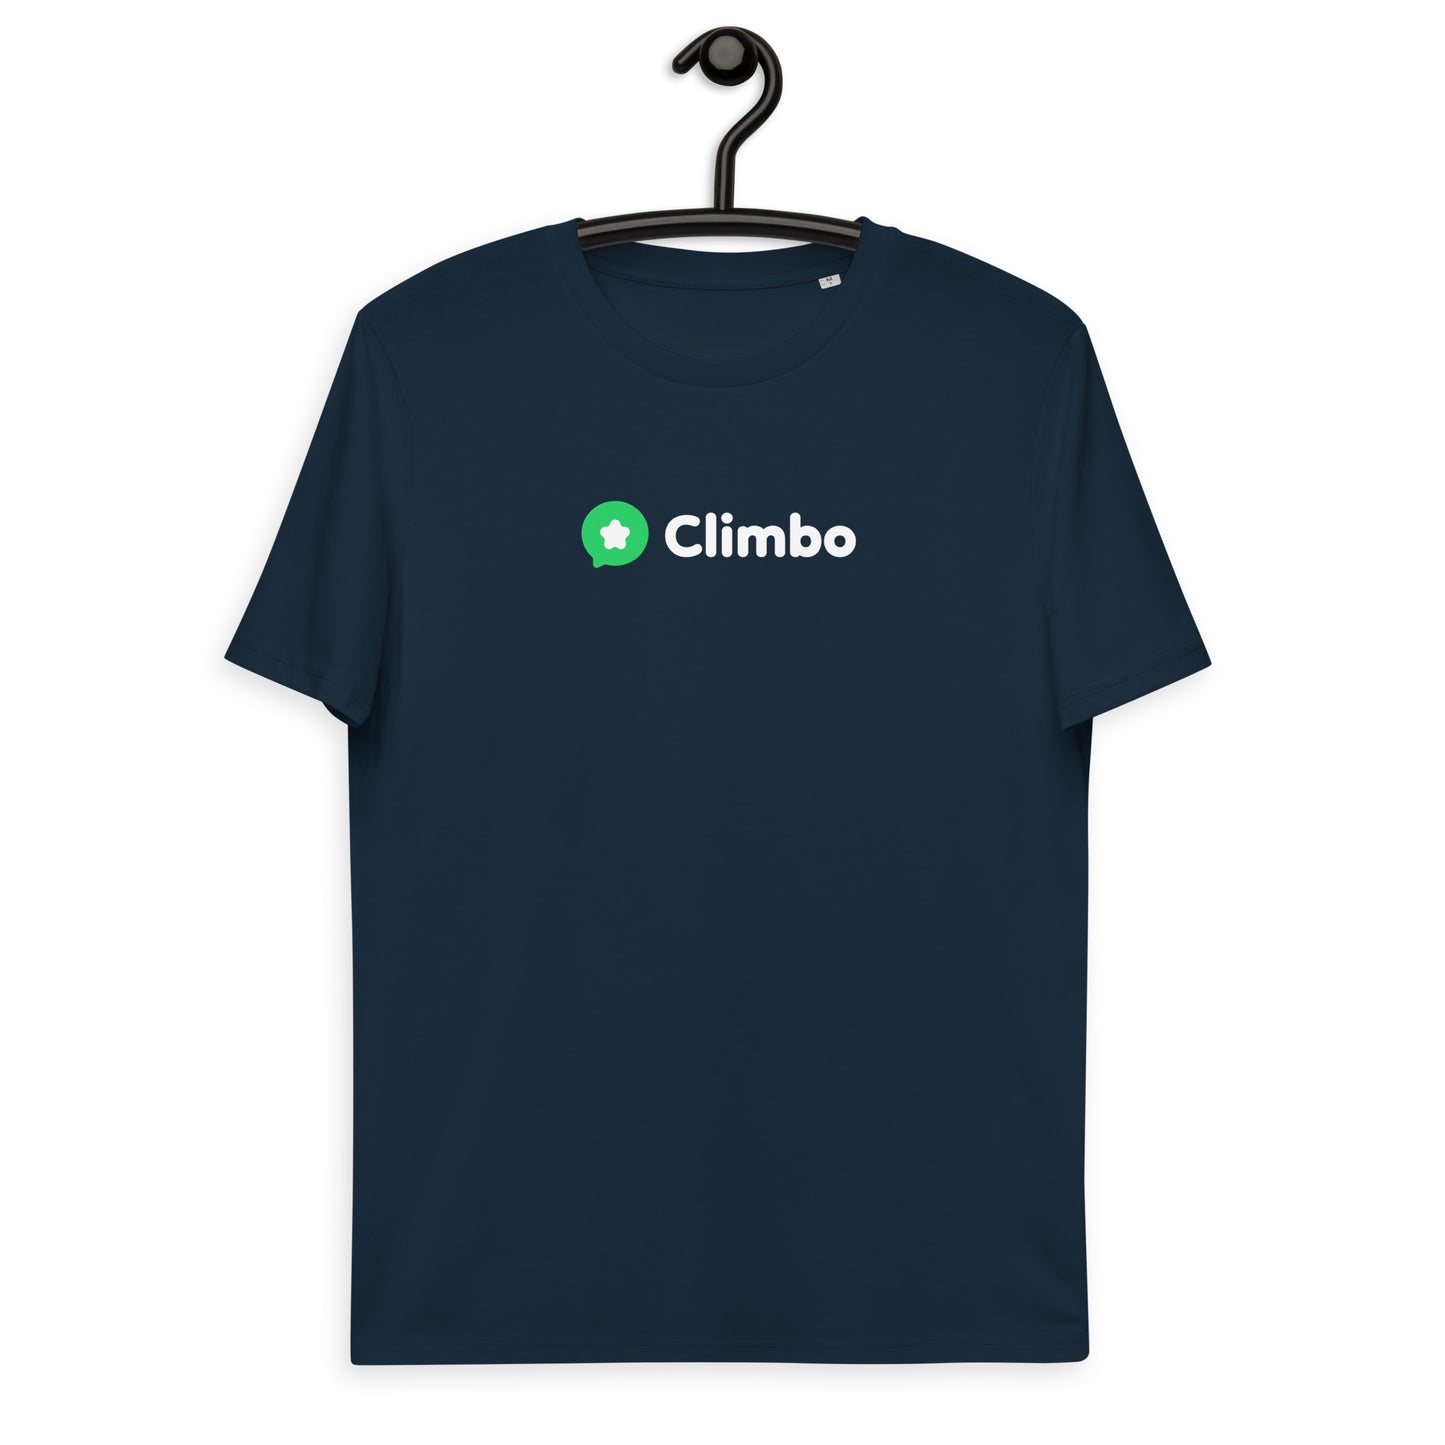 Climbo Tee - Unisex organic cotton t-shirt